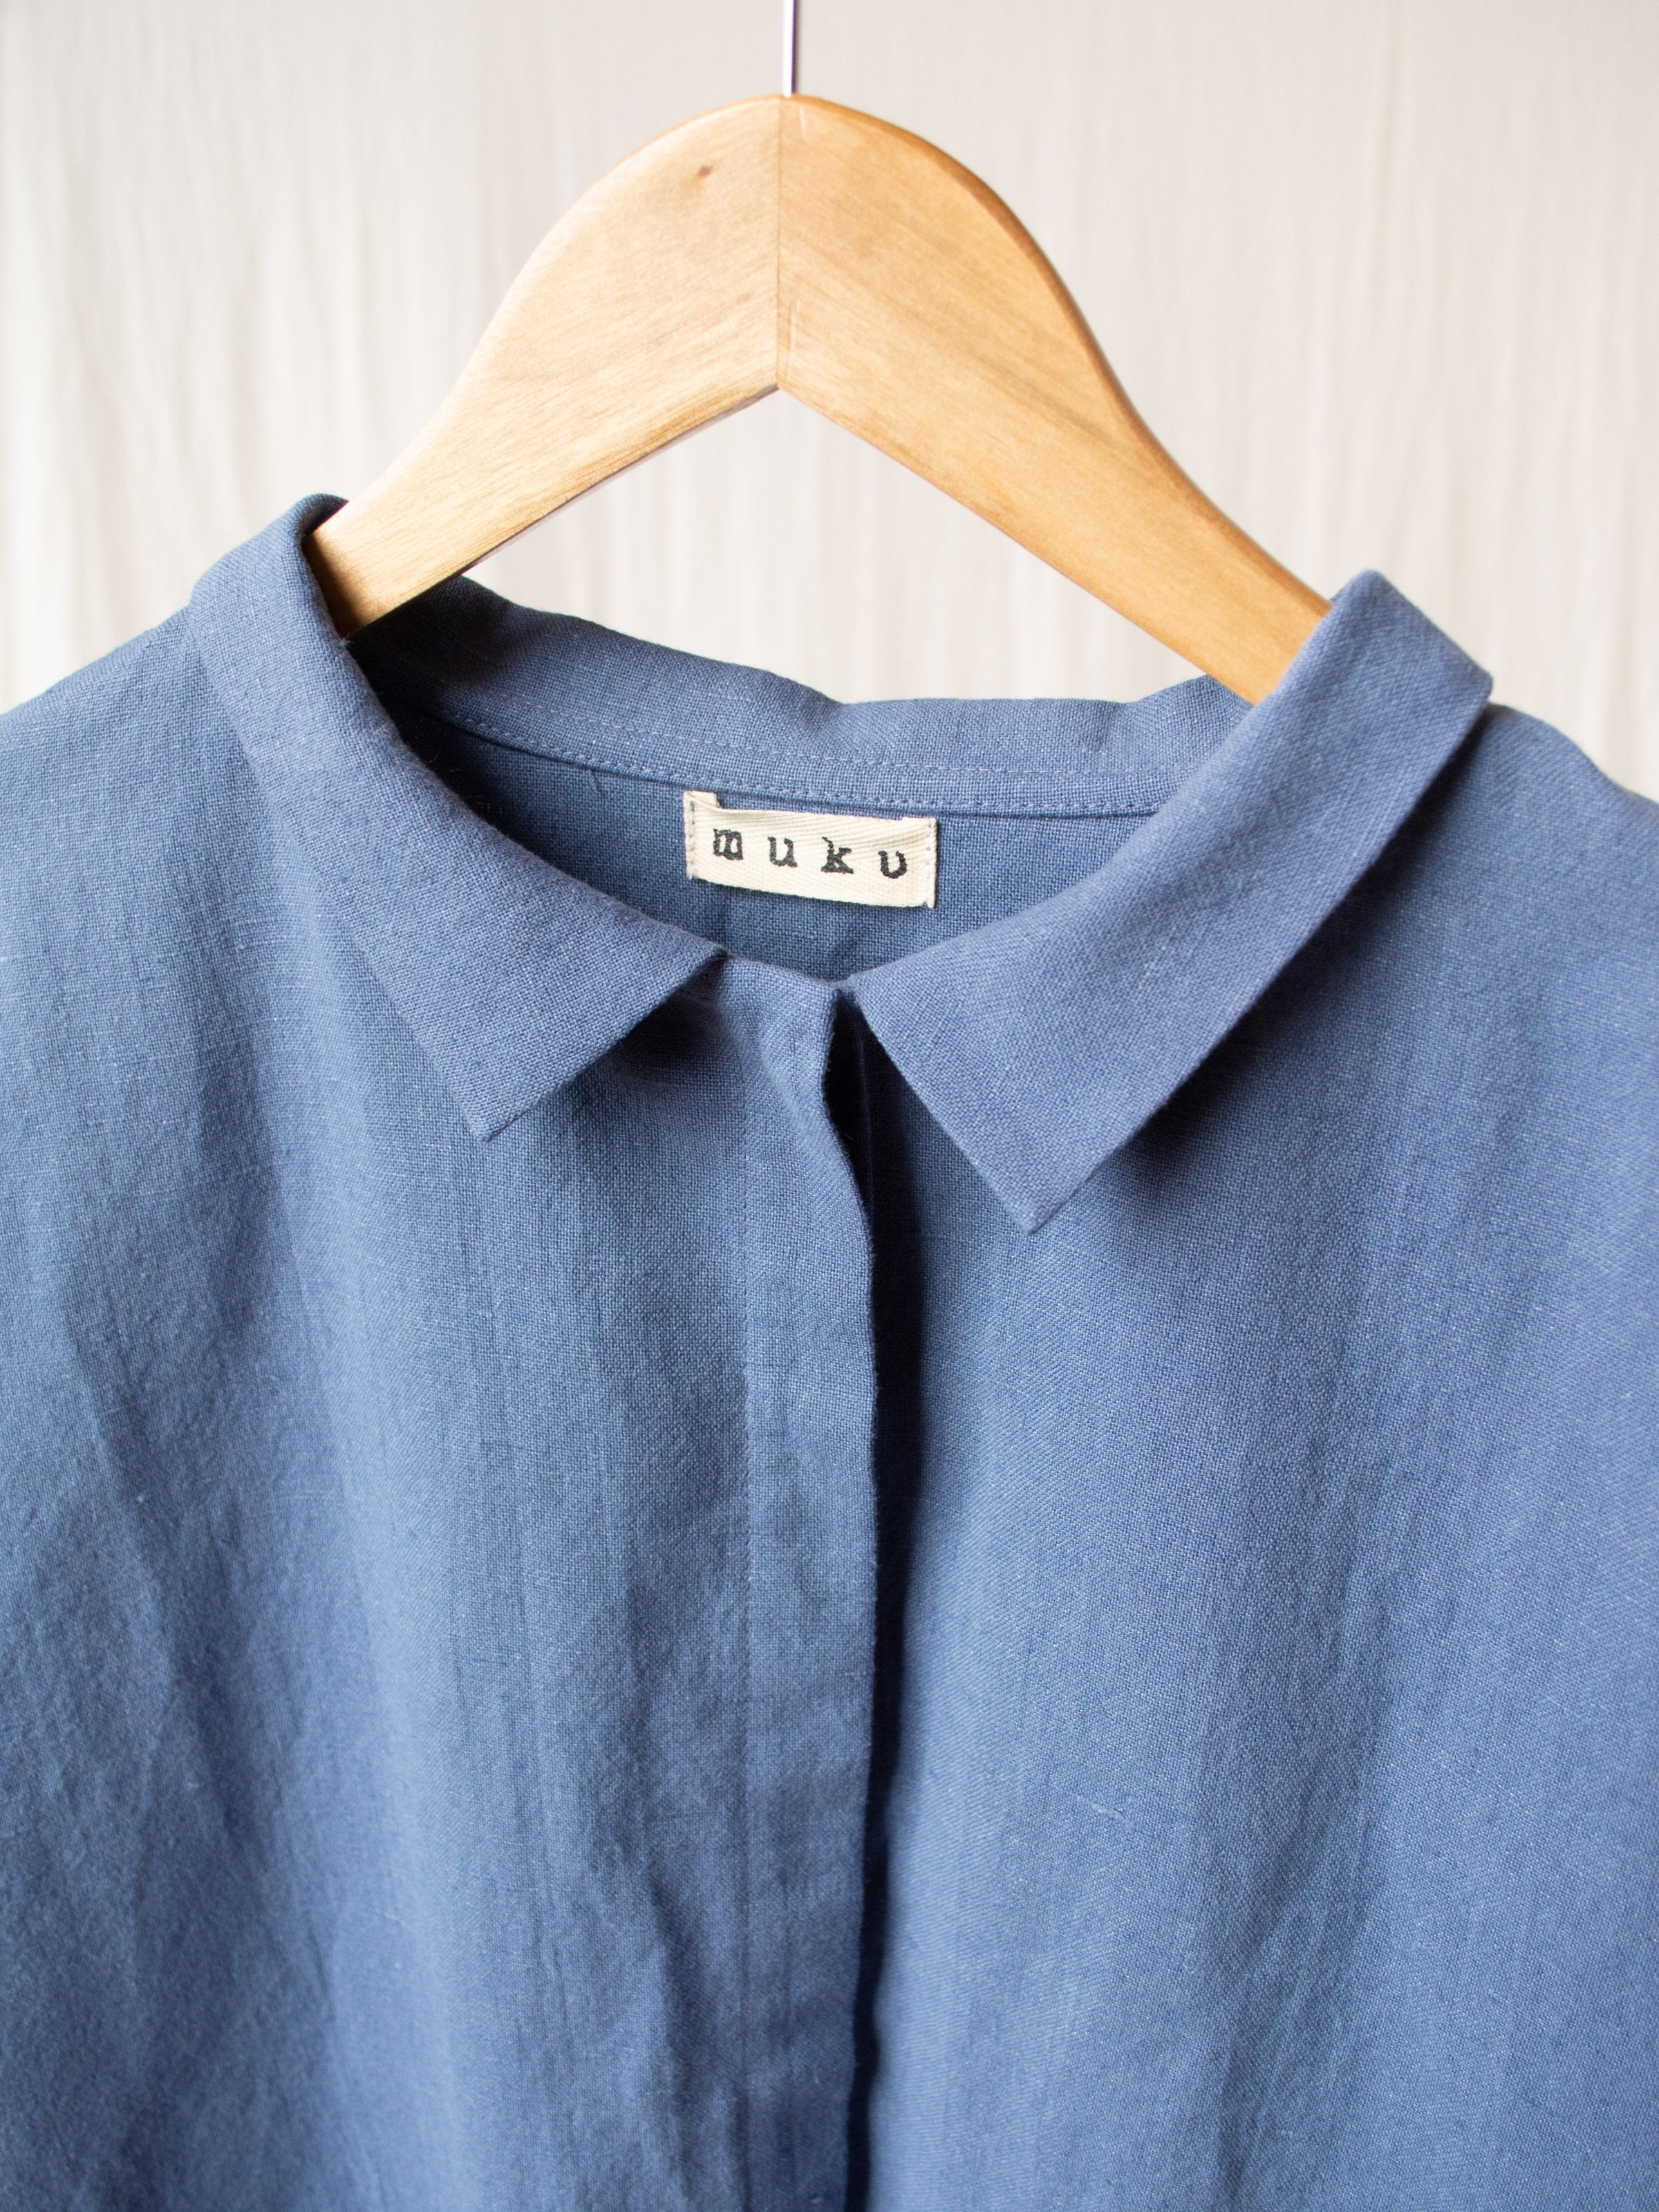 Namu Shop - muku Li / Co Shirt Jacket - Pale Indigo